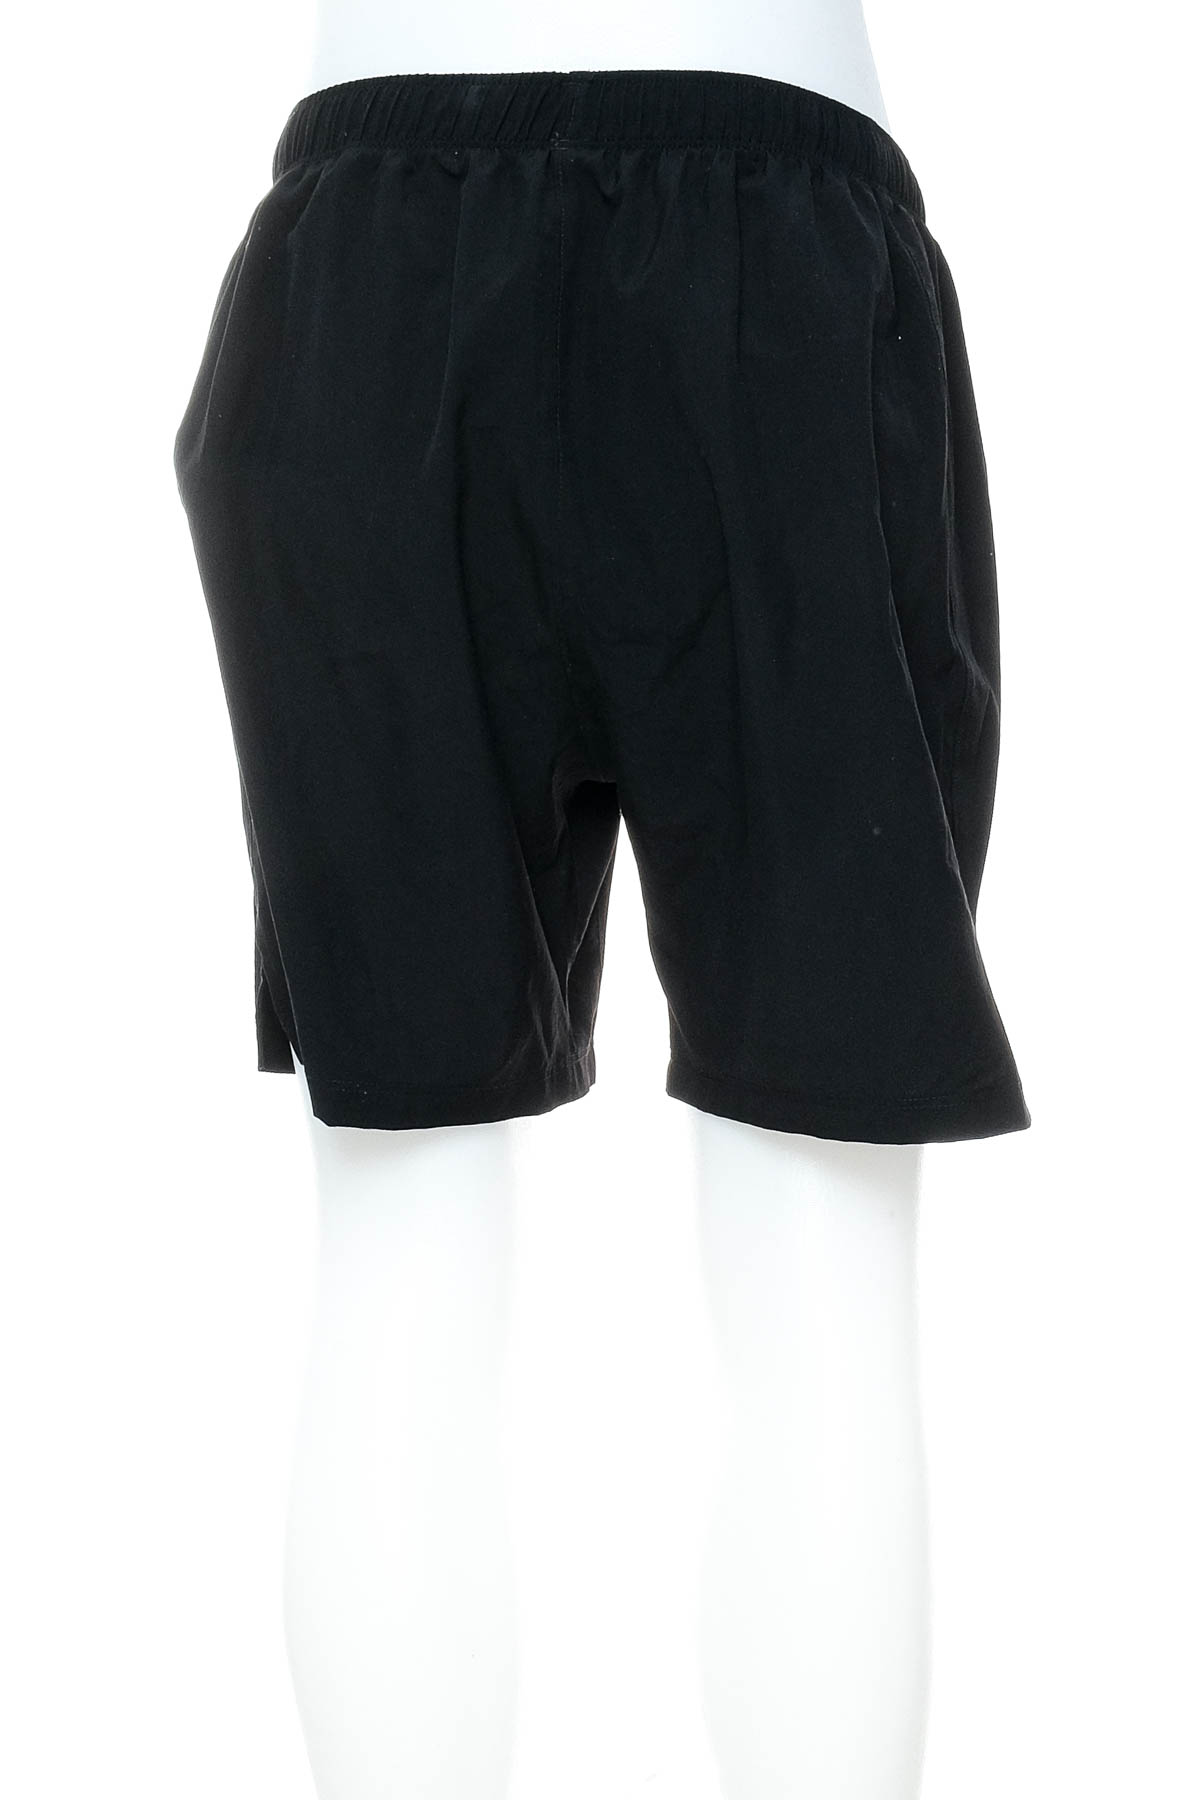 Men's shorts - Asics - 1